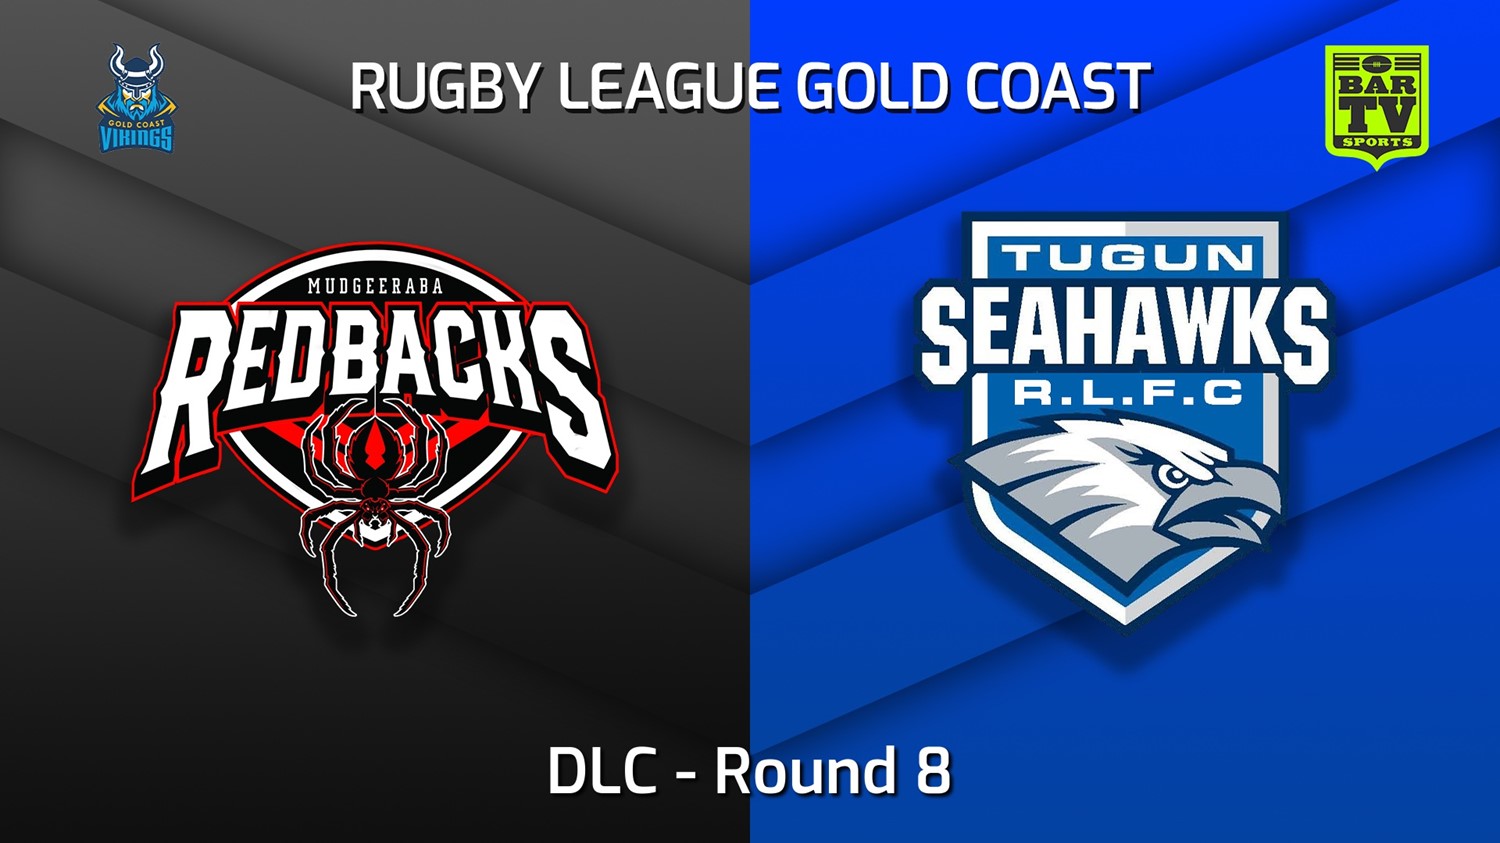 220529-Gold Coast Round 8 - DLC - Mudgeeraba Redbacks v Tugun Seahawks Slate Image